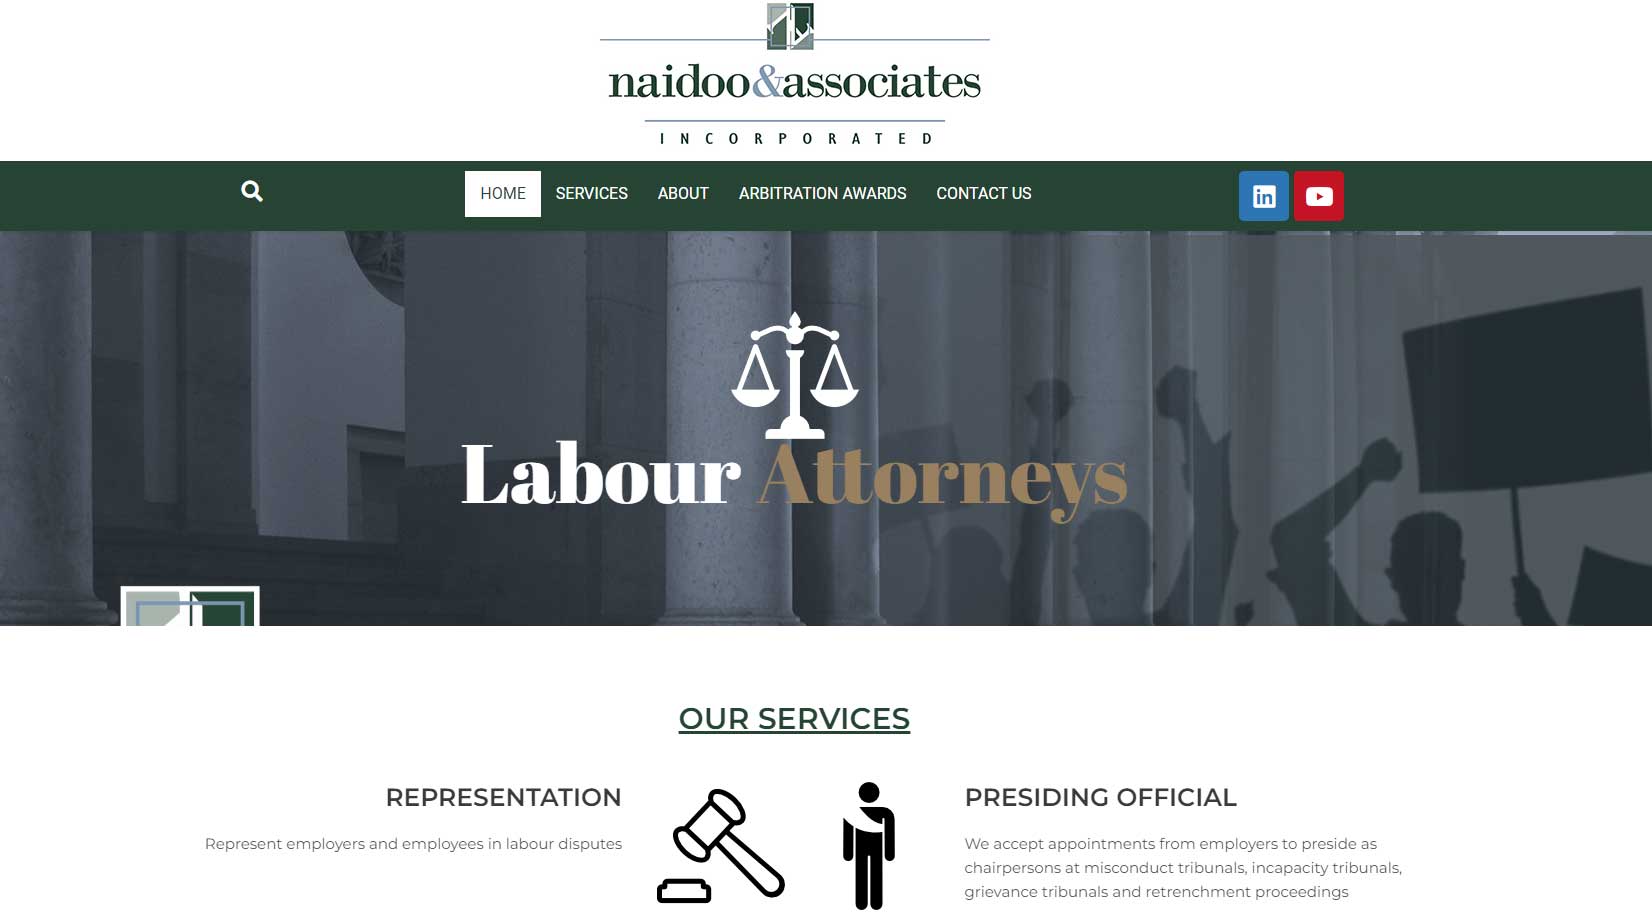 Naidoo and Associates